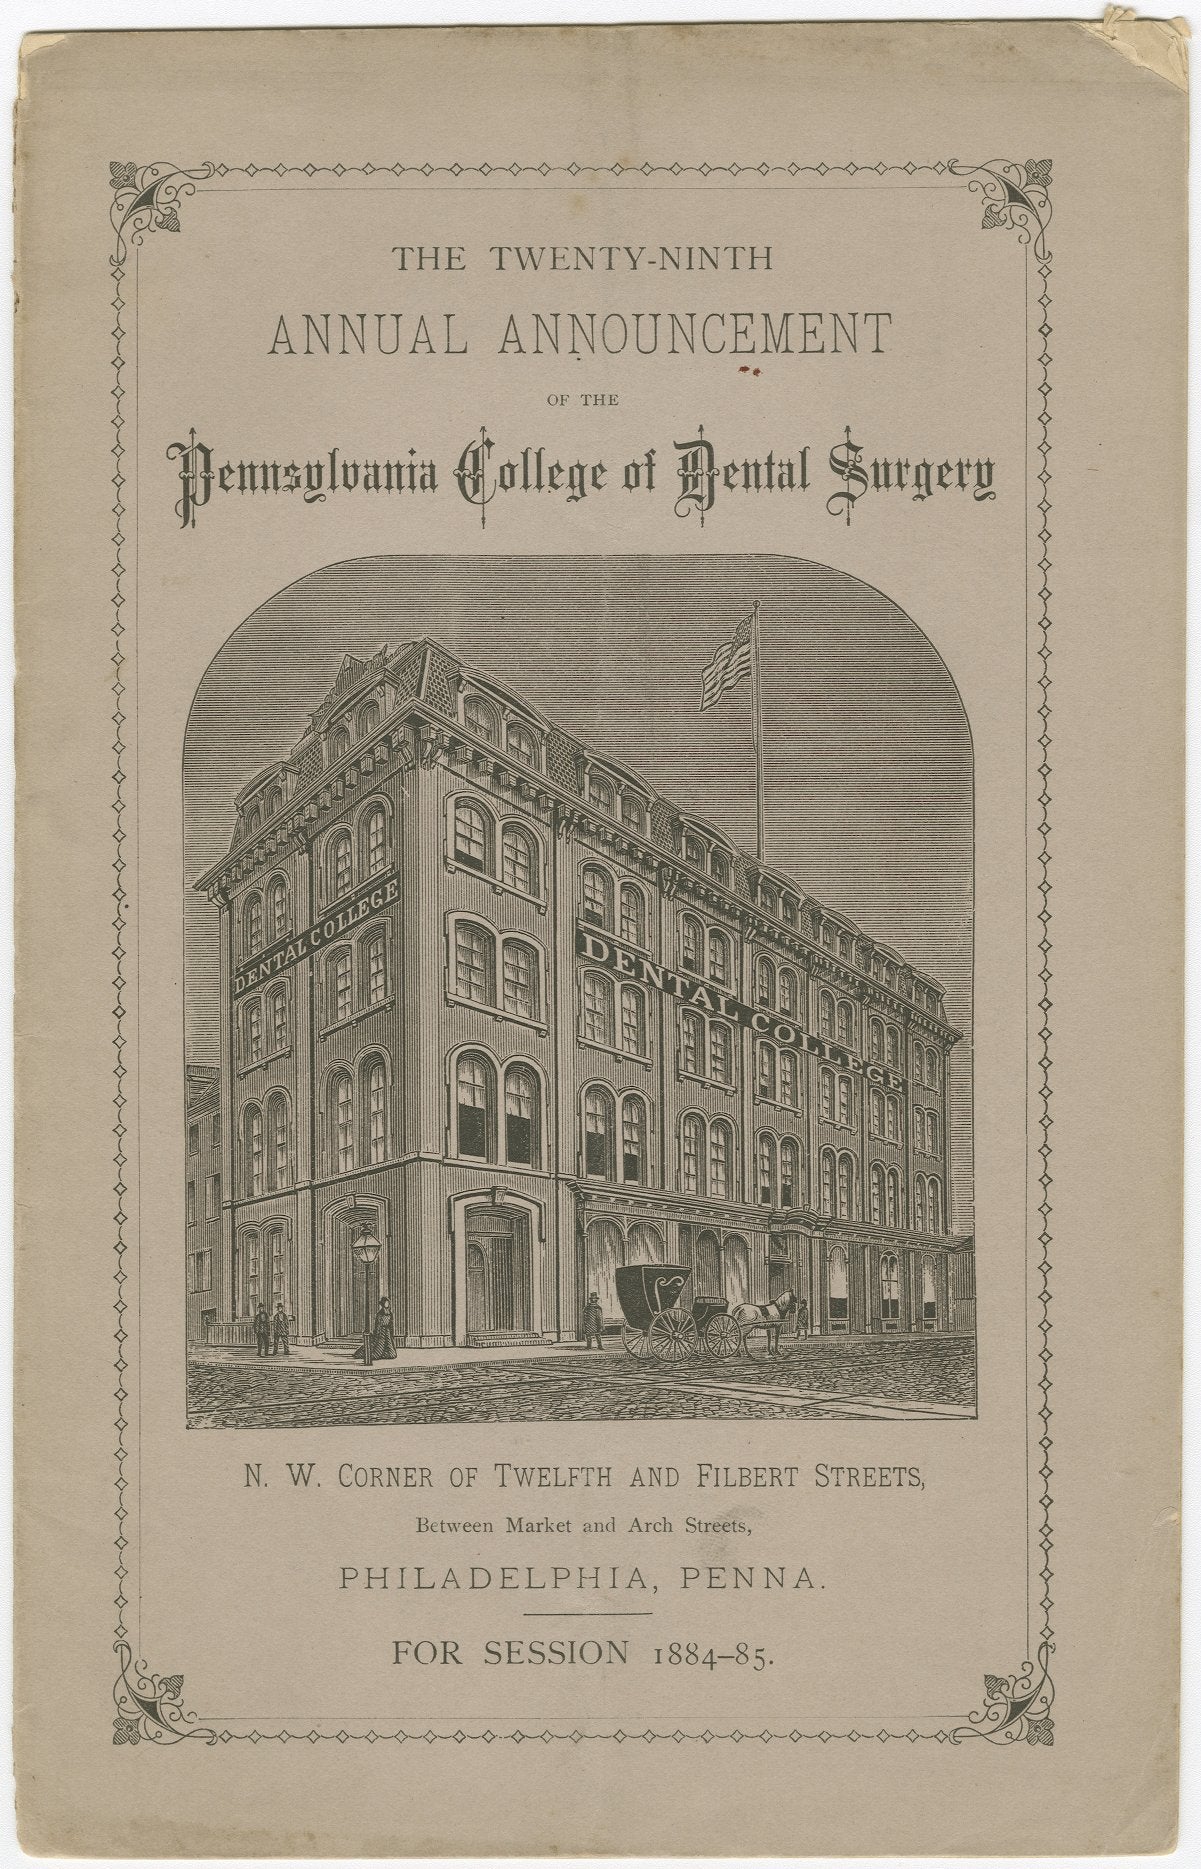 Pennsylvania College of Dental Surgery Twenty-Ninth Annual Announcement, 1884